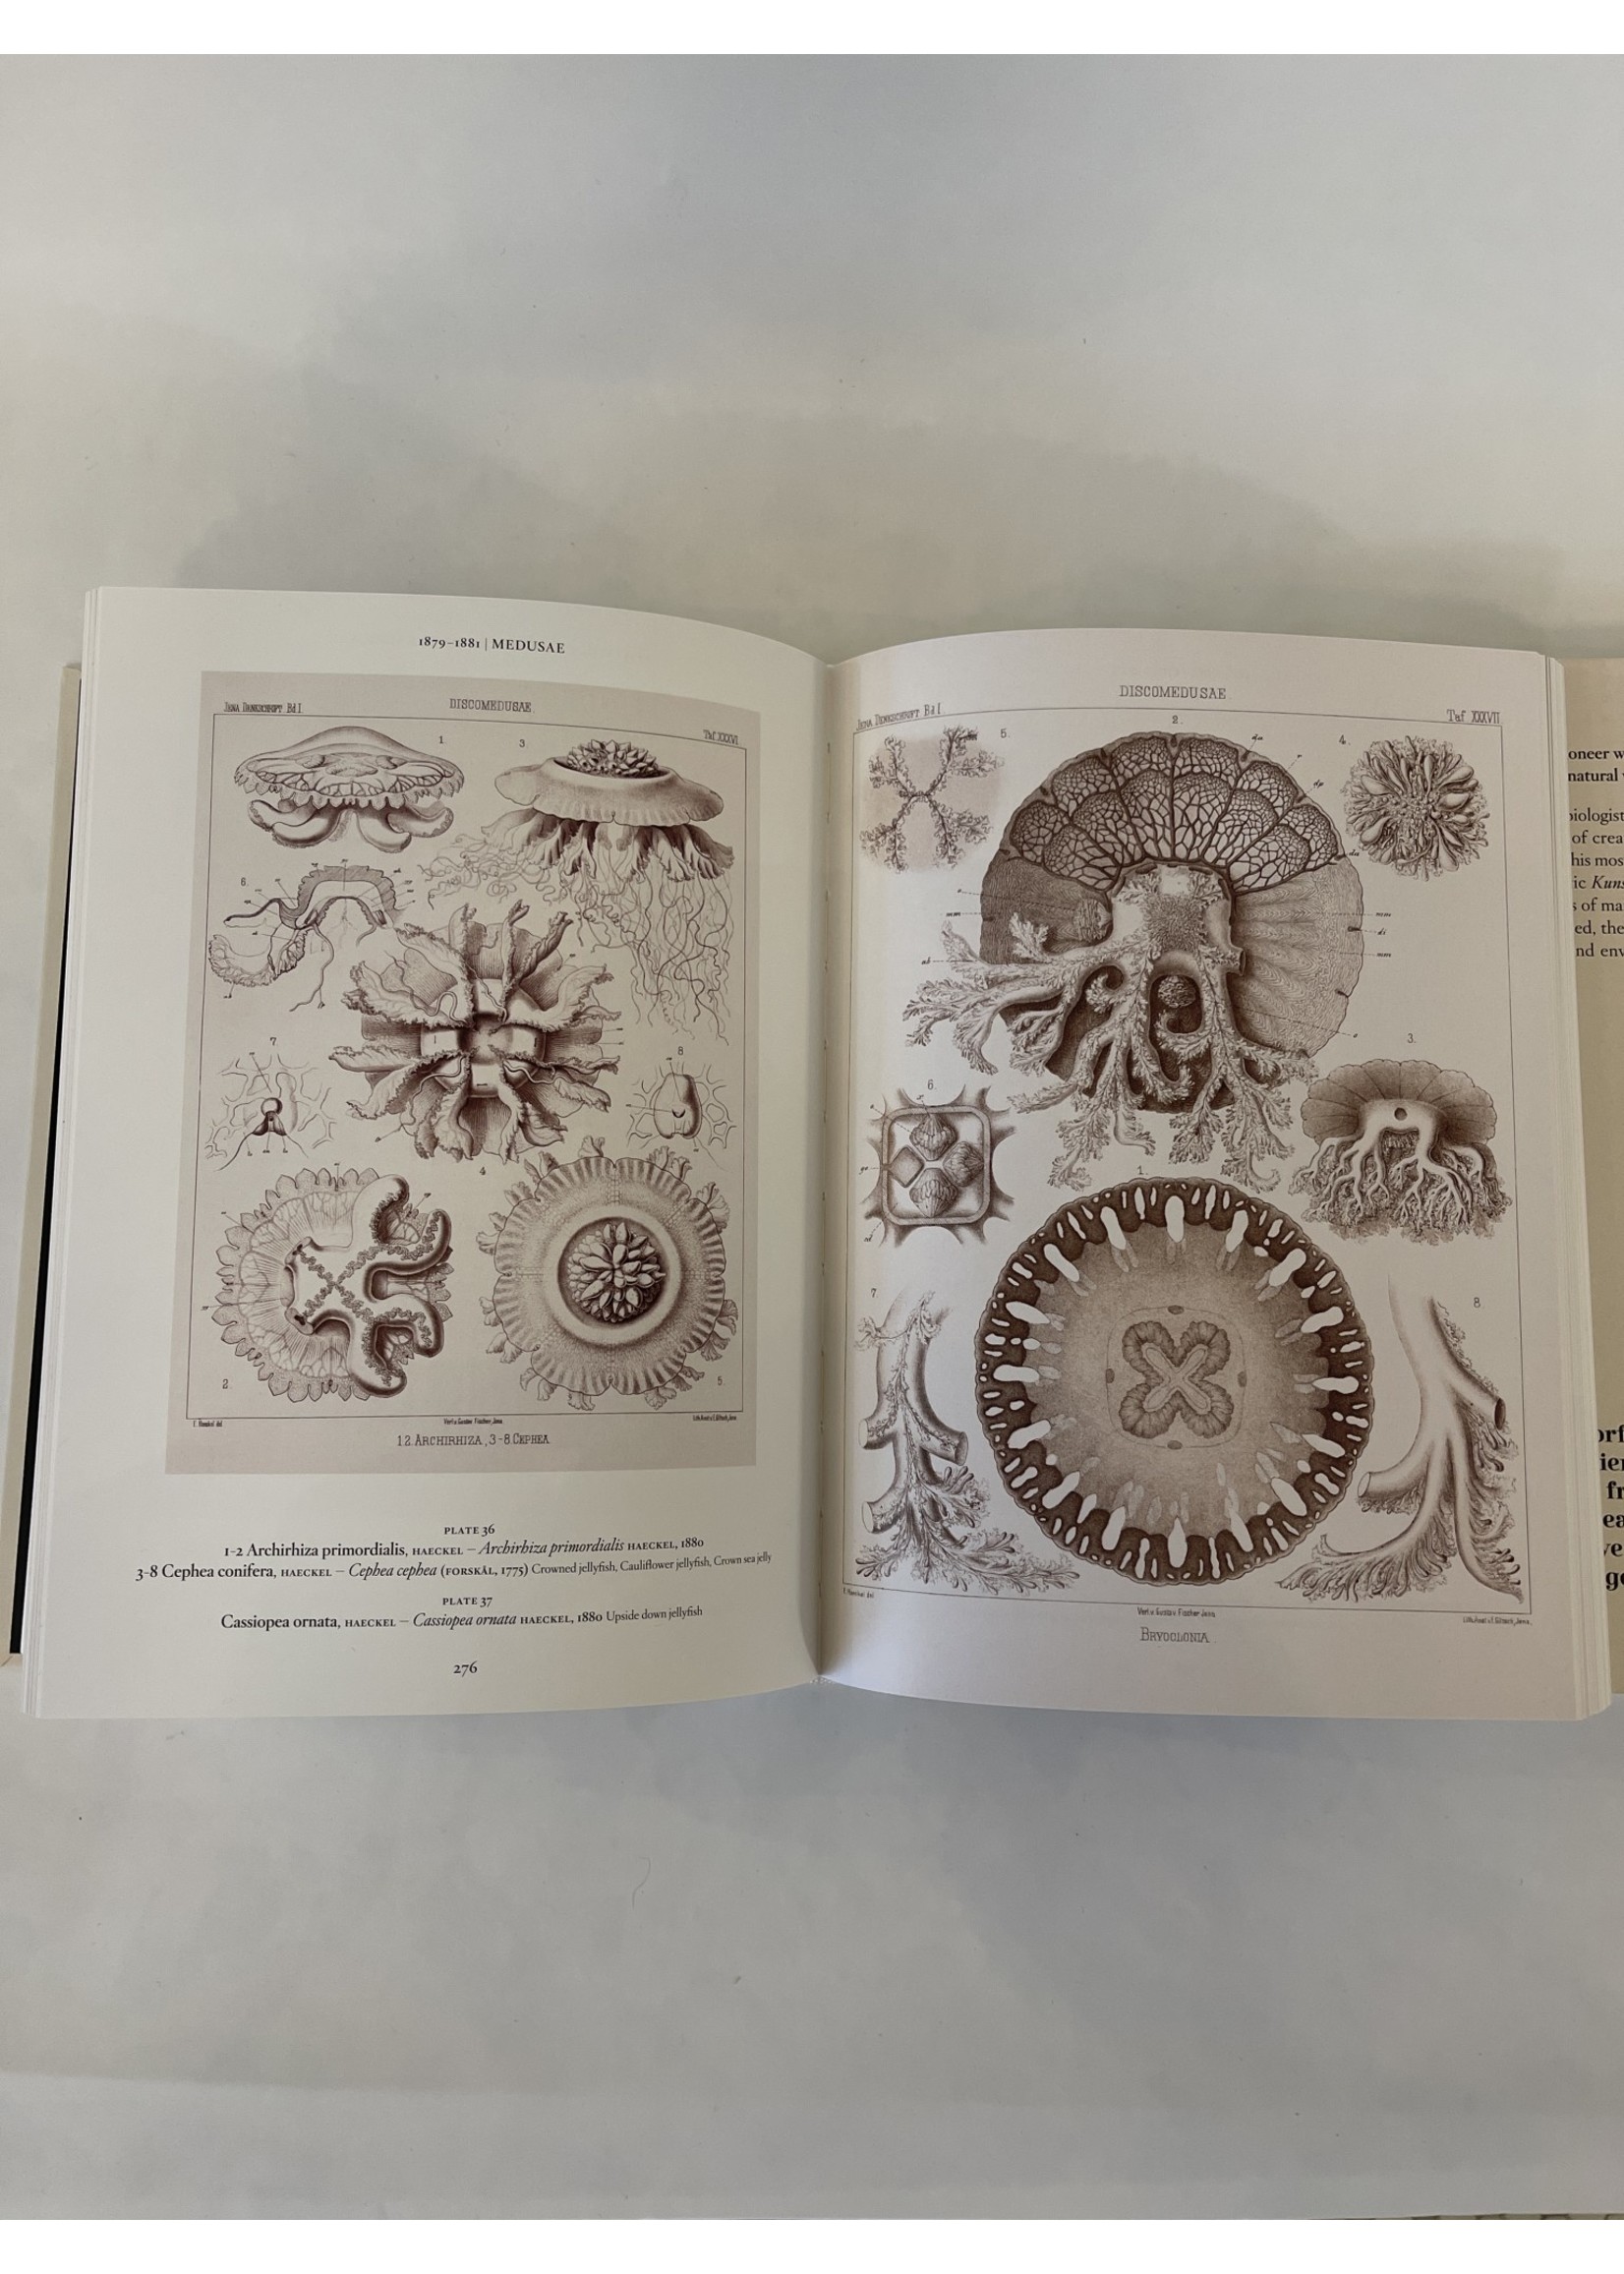 Taschen Books The Art & Science of Ernst Haeckel - small format